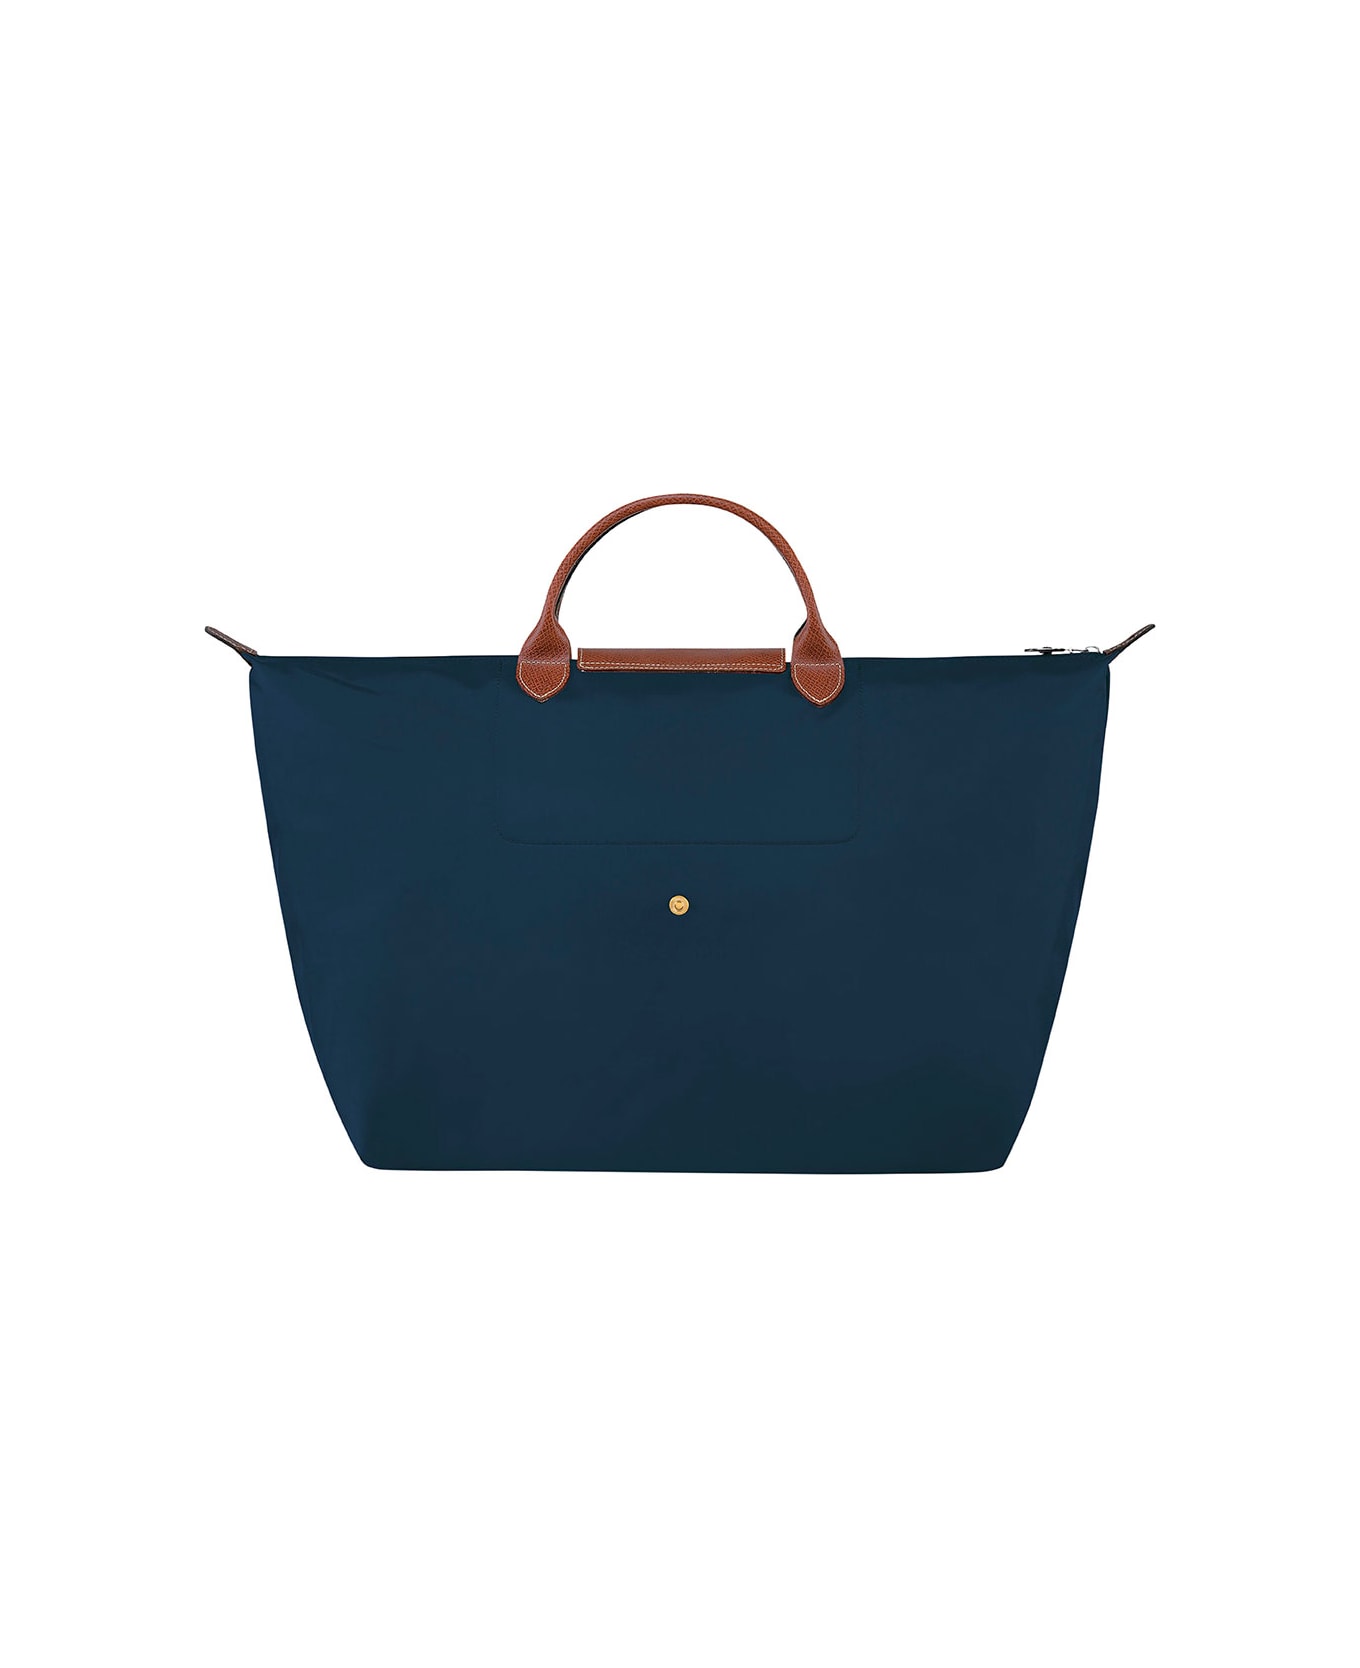 Longchamp Travel Bag S - Navy